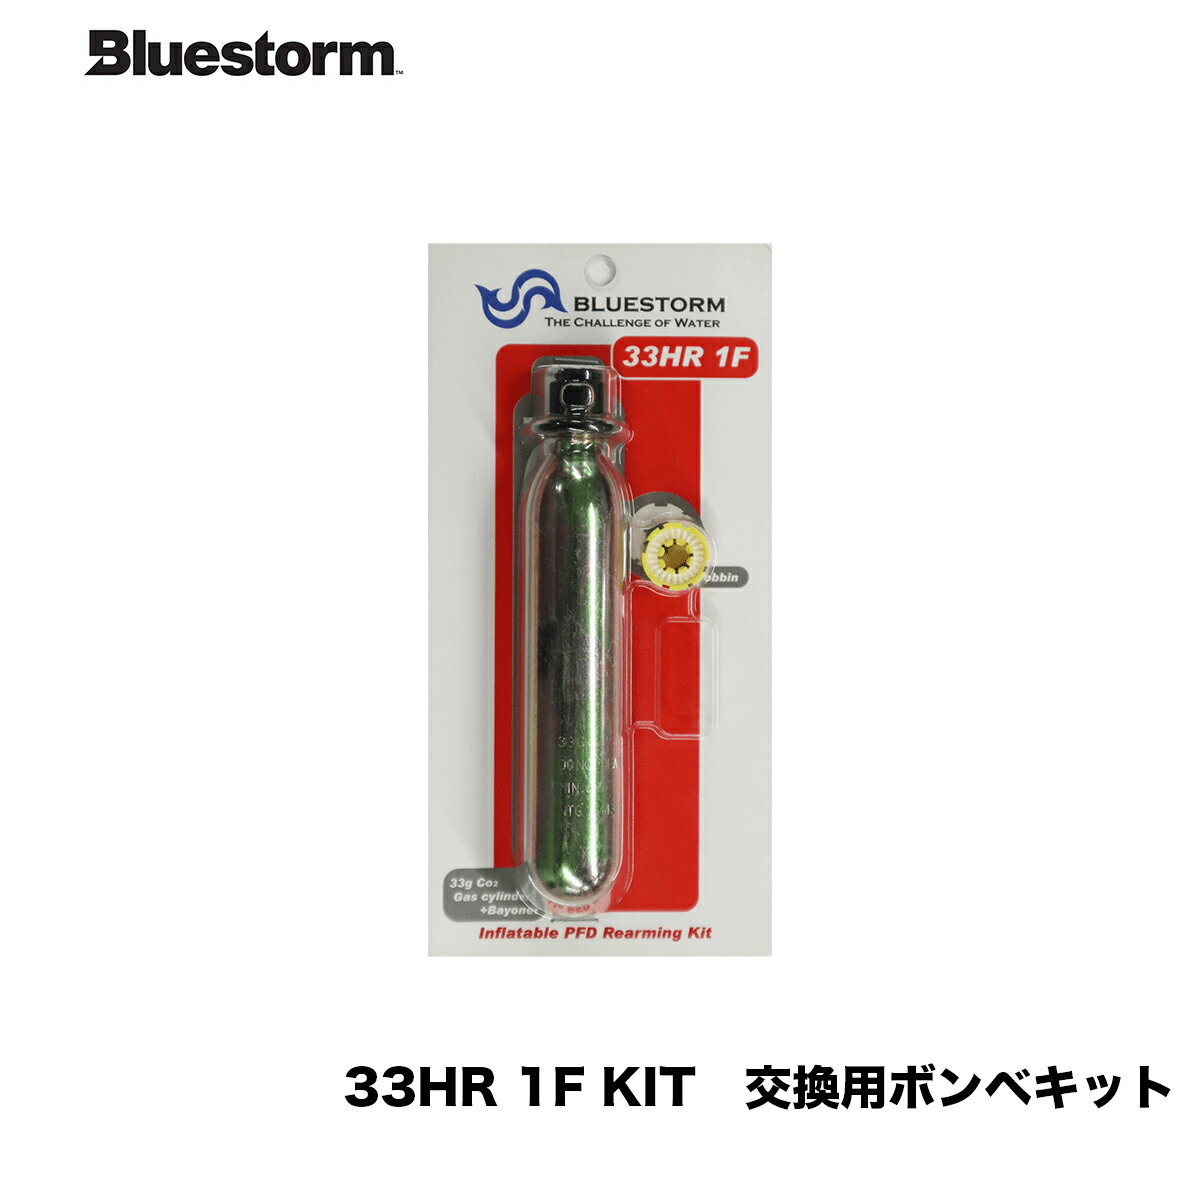 Bluestorm　■33HR 1F KIT [ハルキーロバーツ社製] 　交換用ボンベキット　■高階救命器具　ブルーストーム　Bluestorm　ライフジャケット　マリンレジャー　HRC社